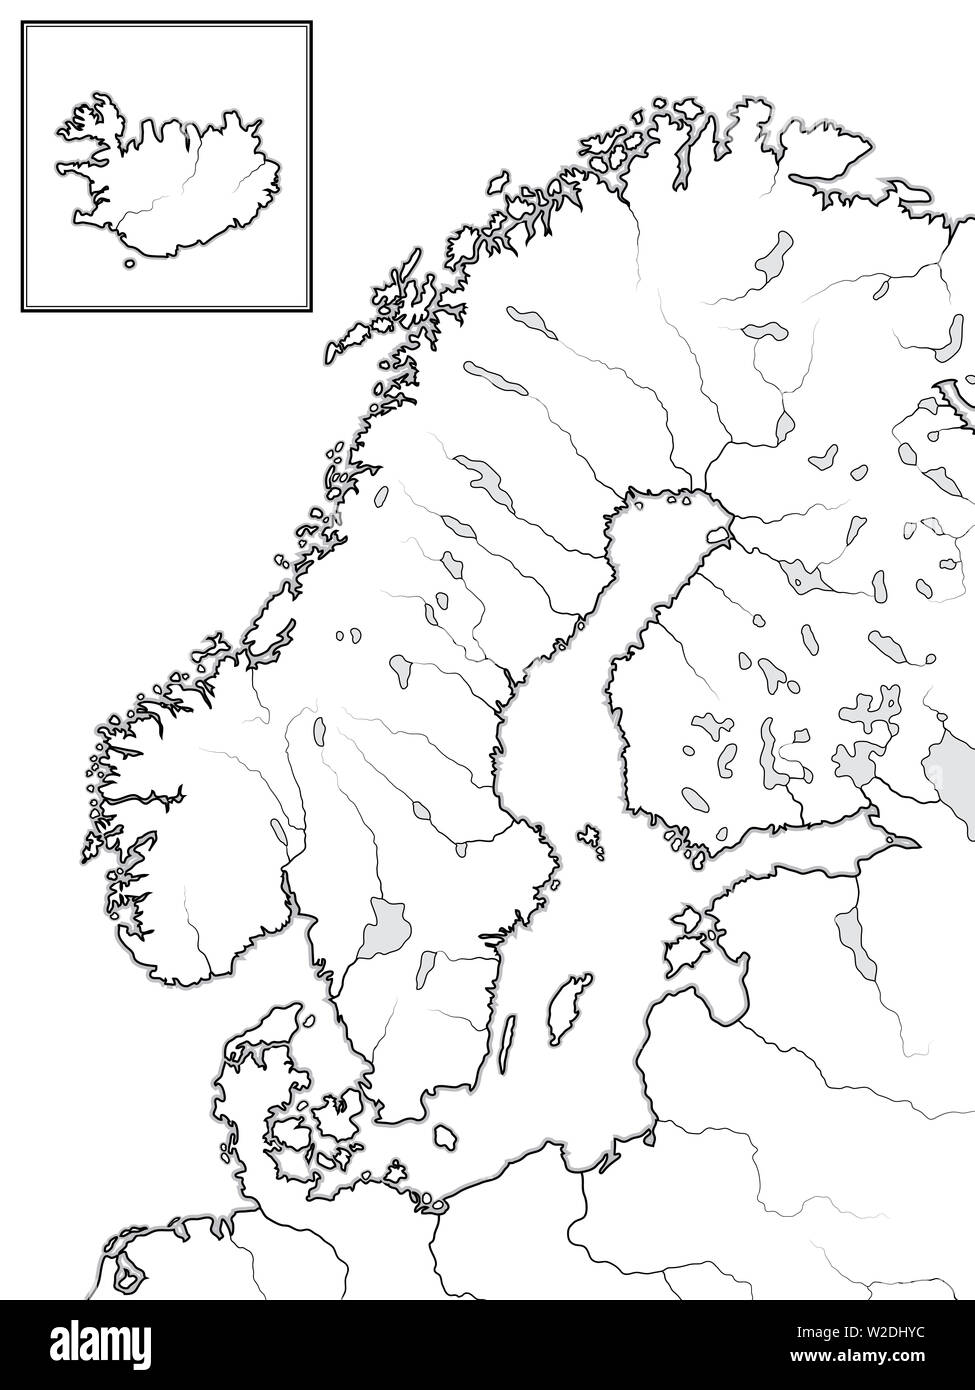 Mapa de las tierras escandinavas: Escandinavia, Suecia, Noruega, Finlandia, Laponia, Karelia, Baltia, Dinamarca e Islandia [INSERT]. Gráfico geográfica. Foto de stock